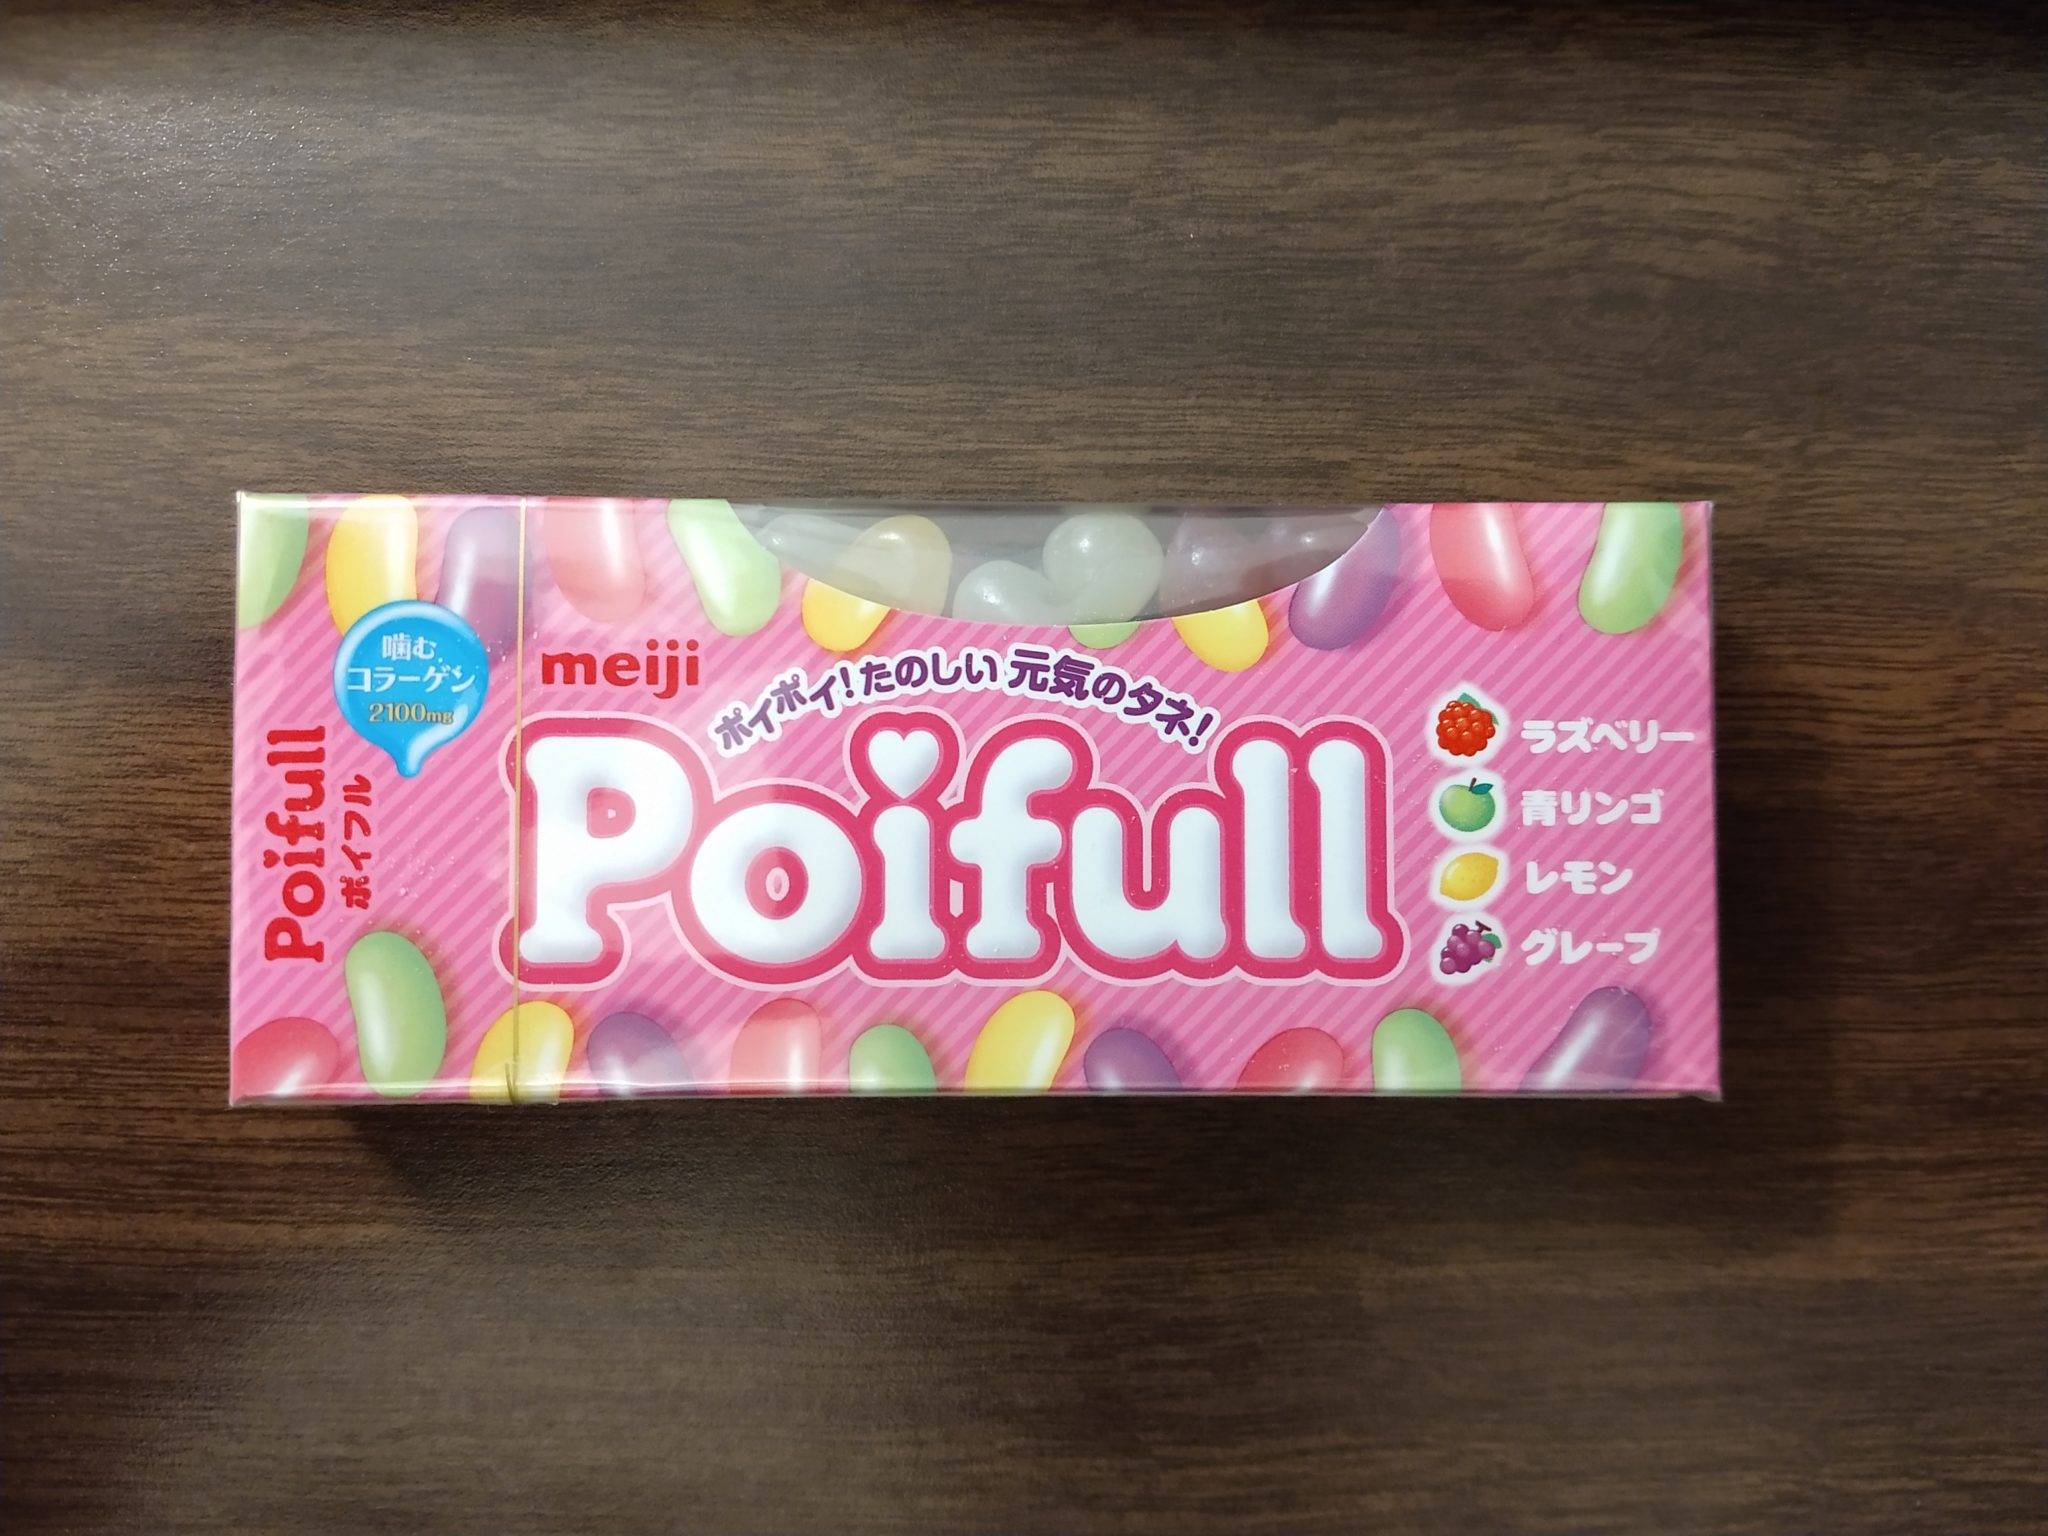 Meiji – Poifull Fruit Mix